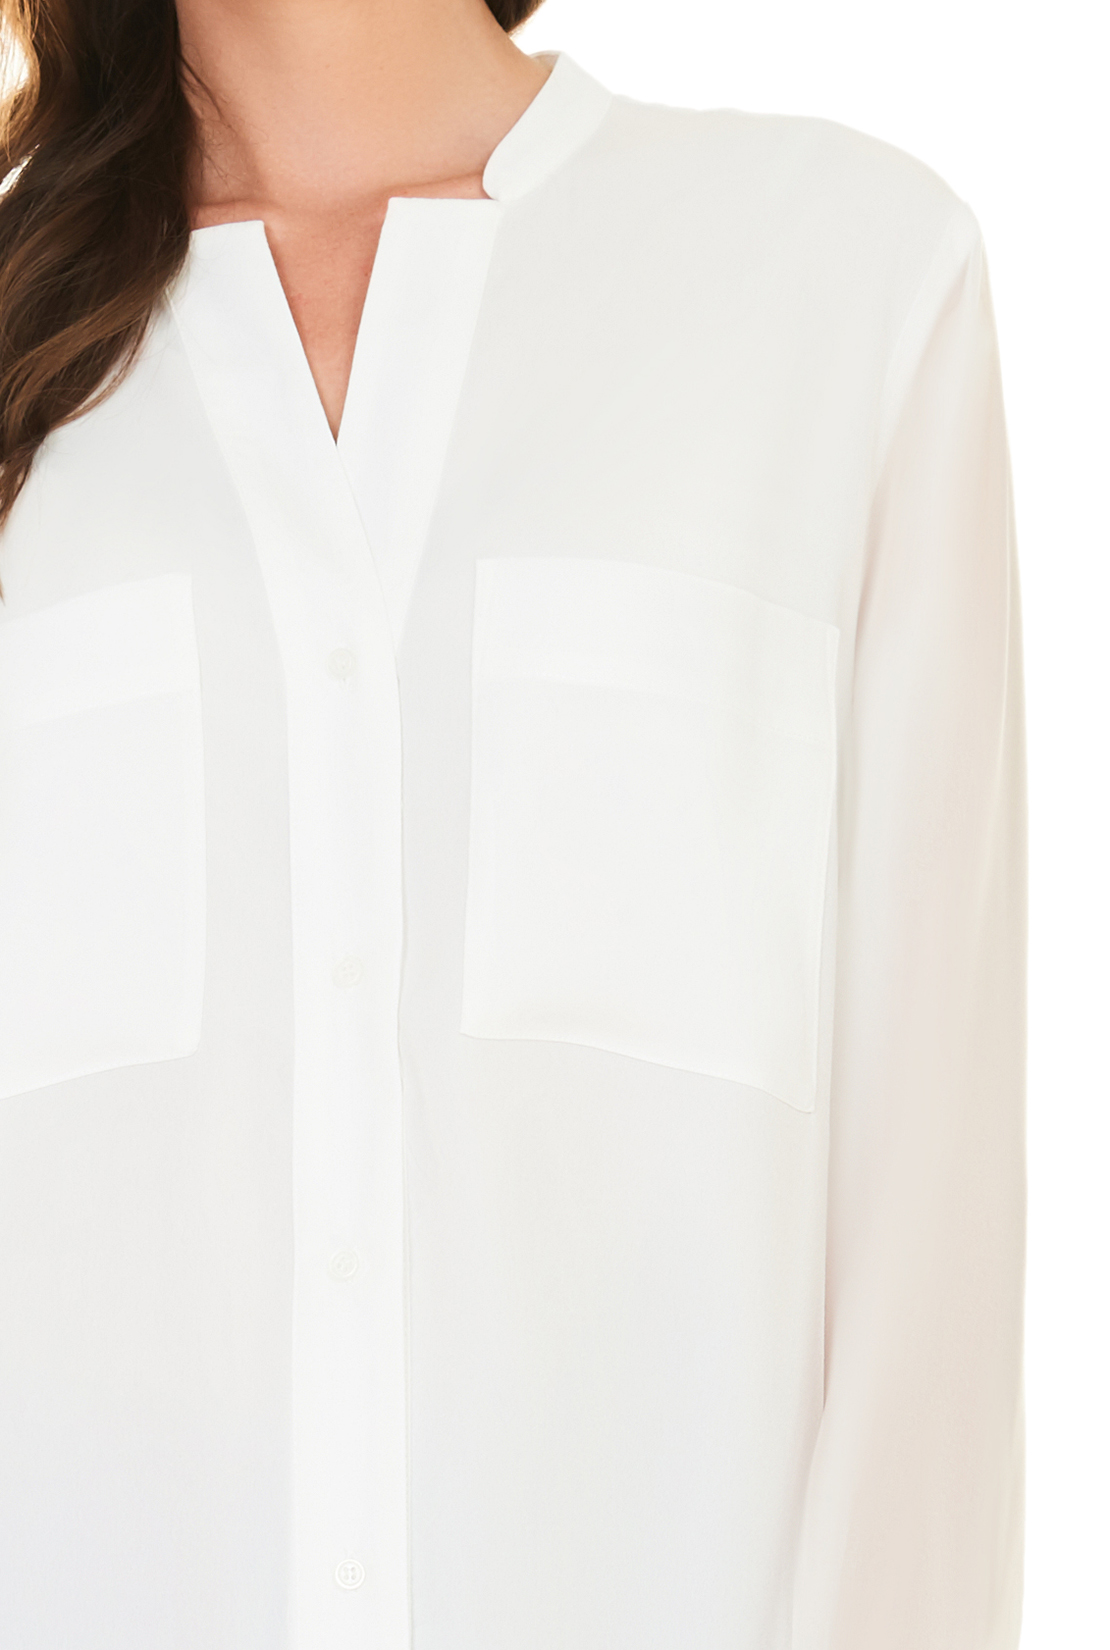 Блузка с накладными карманами (арт. baon B177544), размер M, цвет белый Блузка с накладными карманами (арт. baon B177544) - фото 4